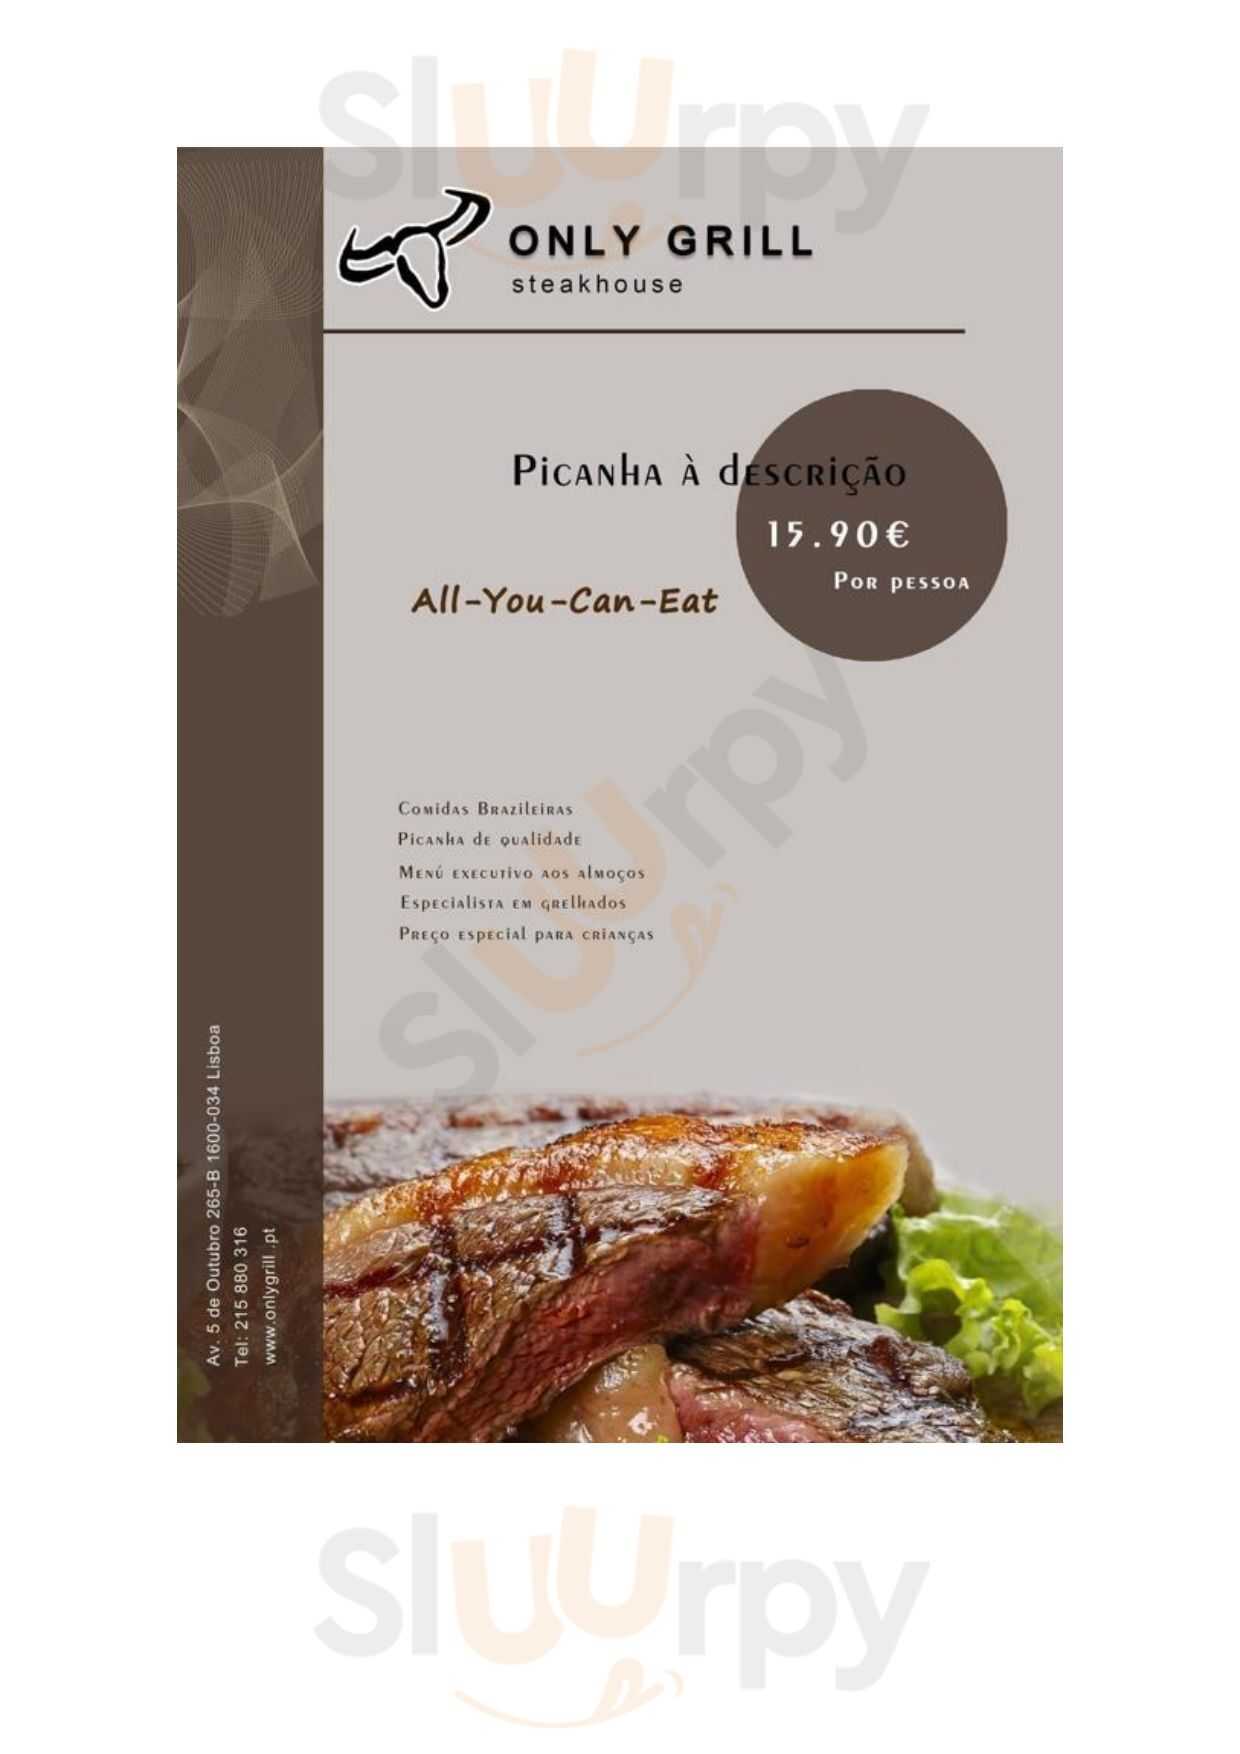 Only Grill Picanha Steak Lisboa Menu - 1